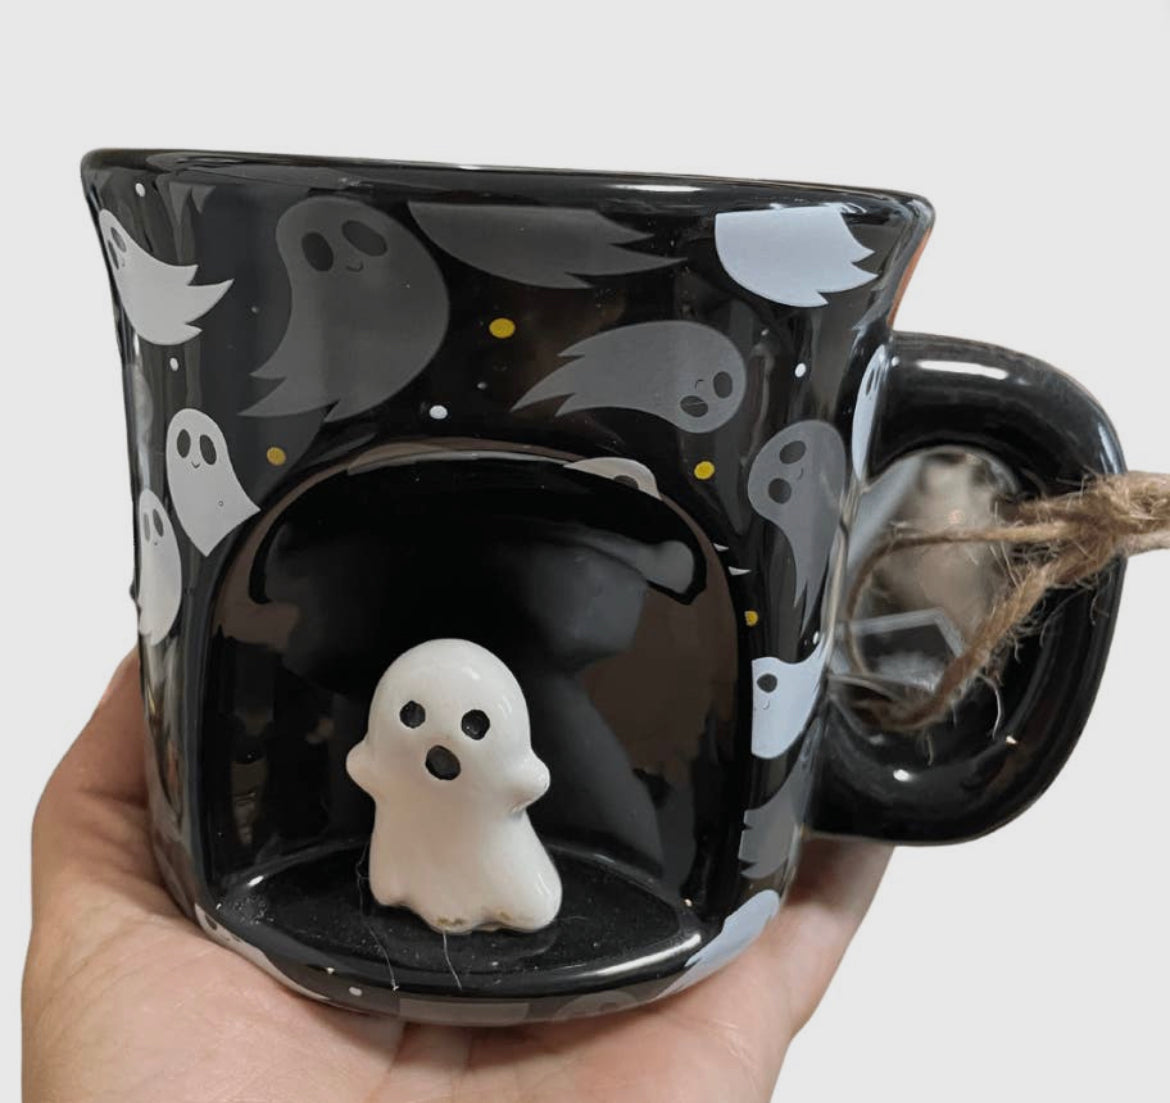 Ghost mug